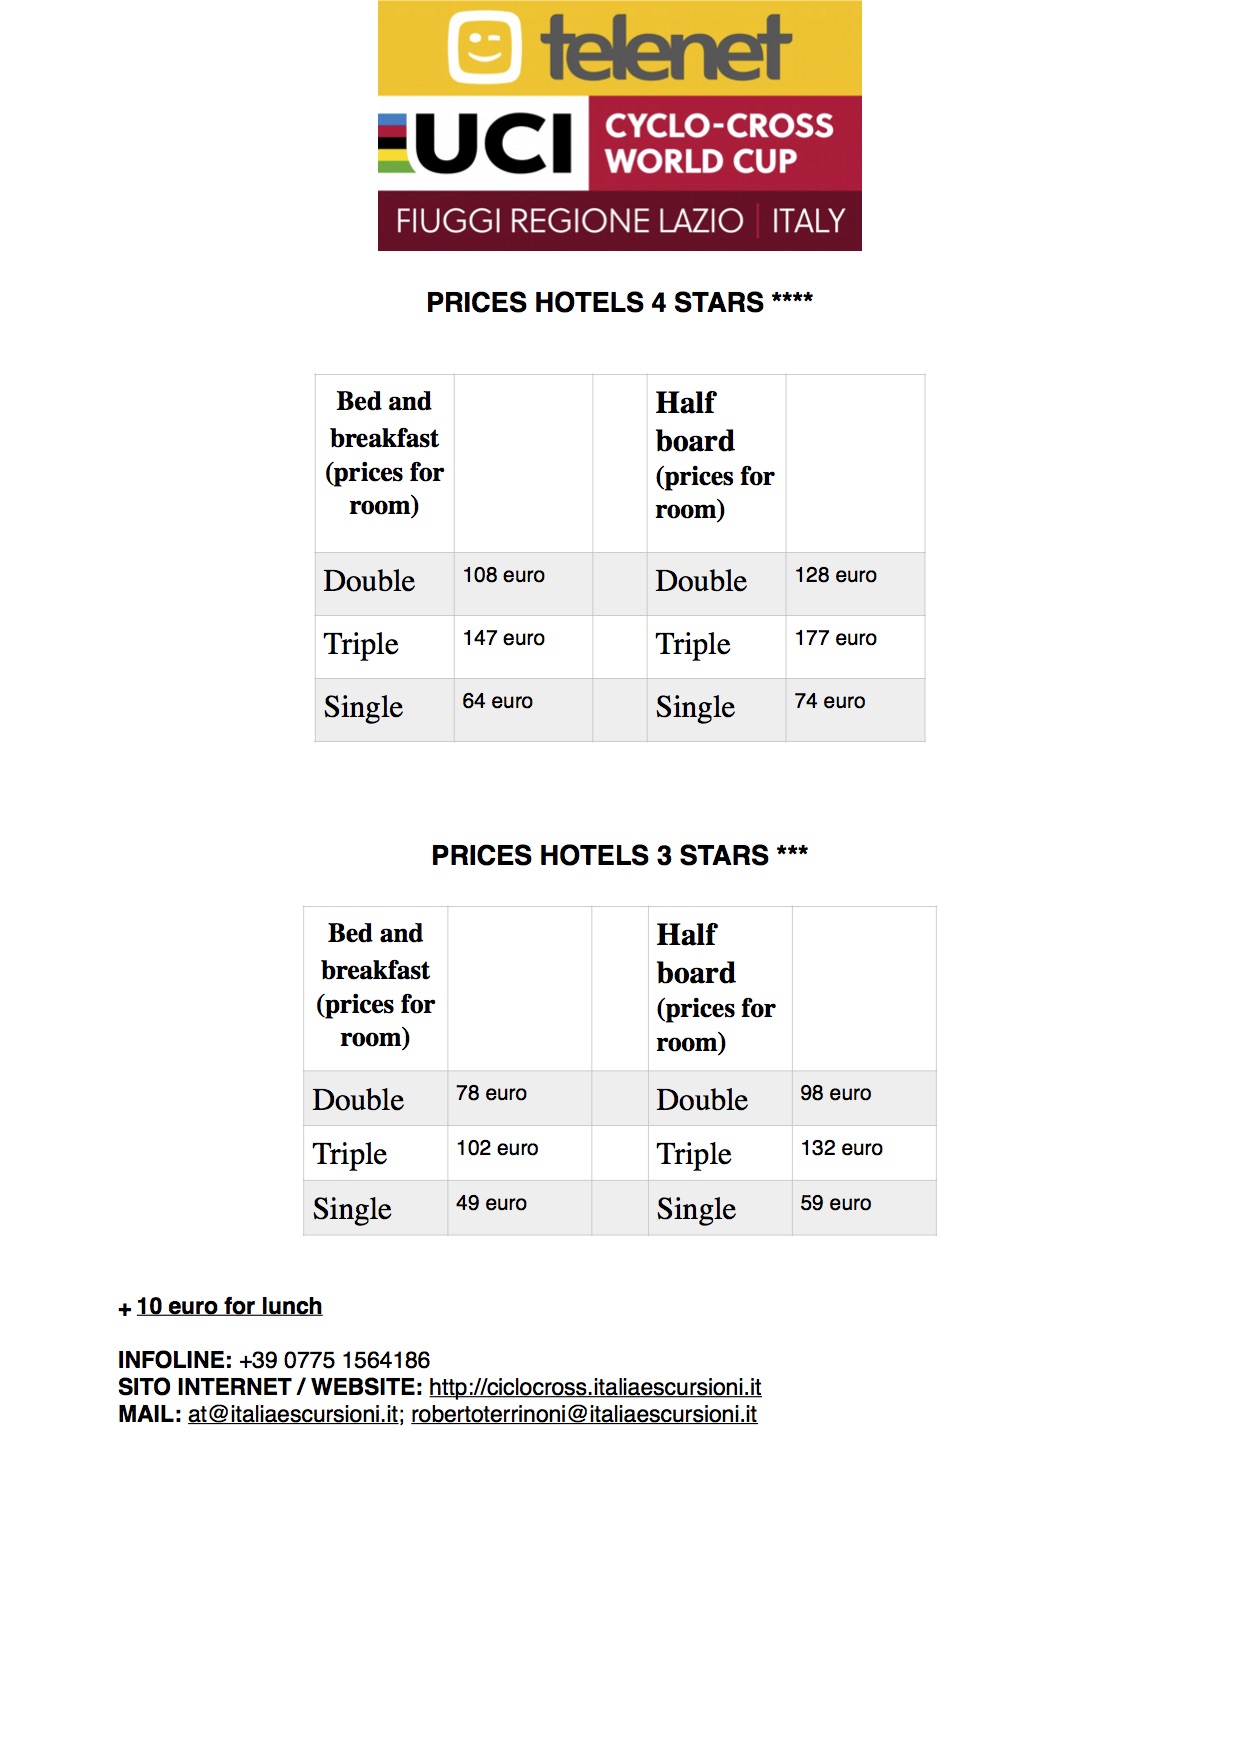 prices-hotels-cdm